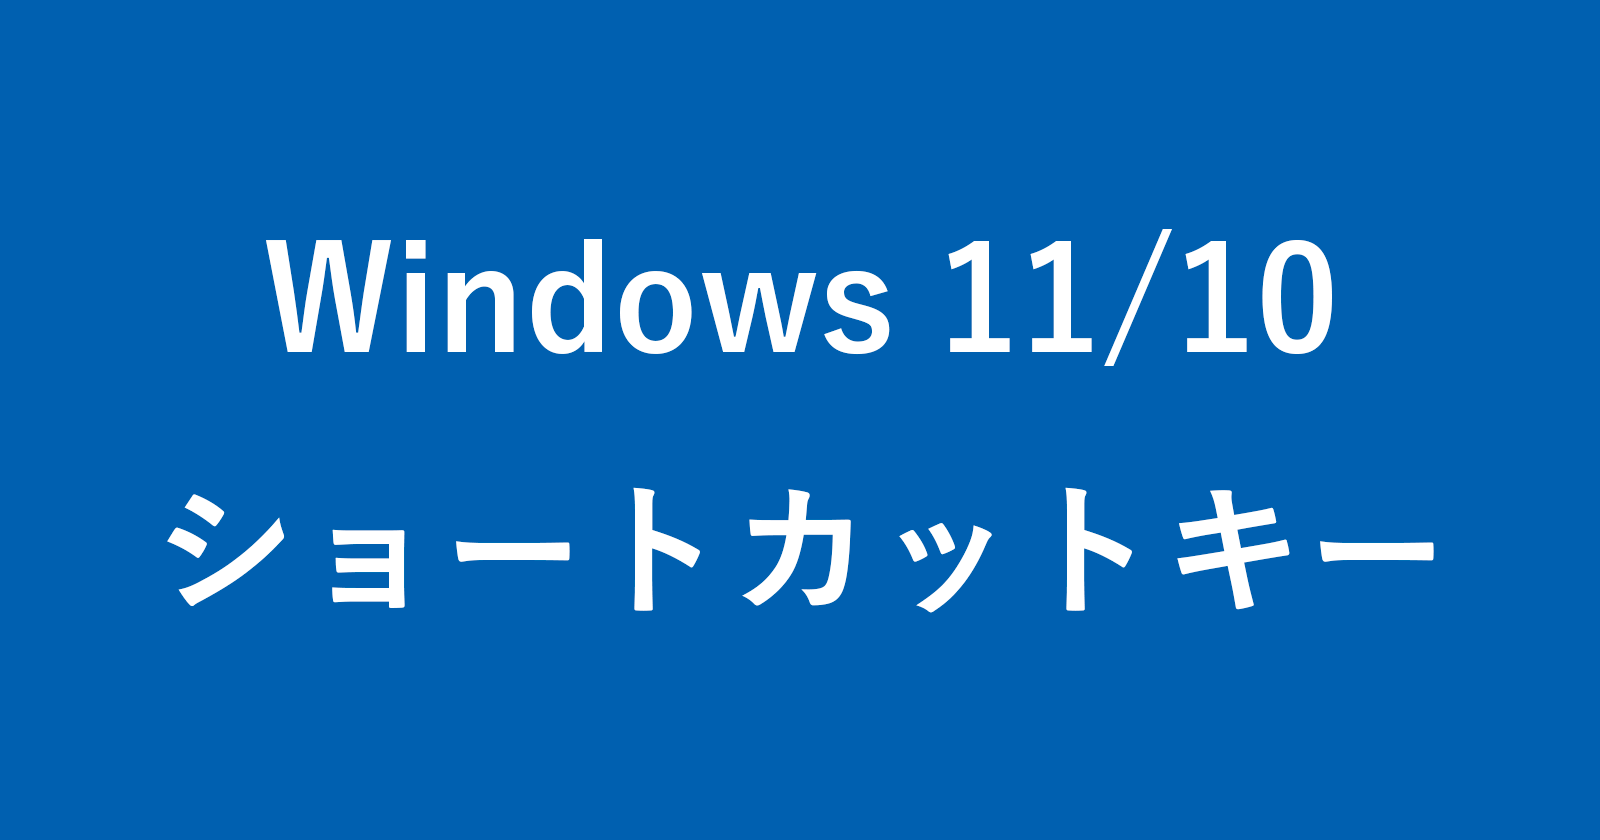 windows 11 10 shortcut key